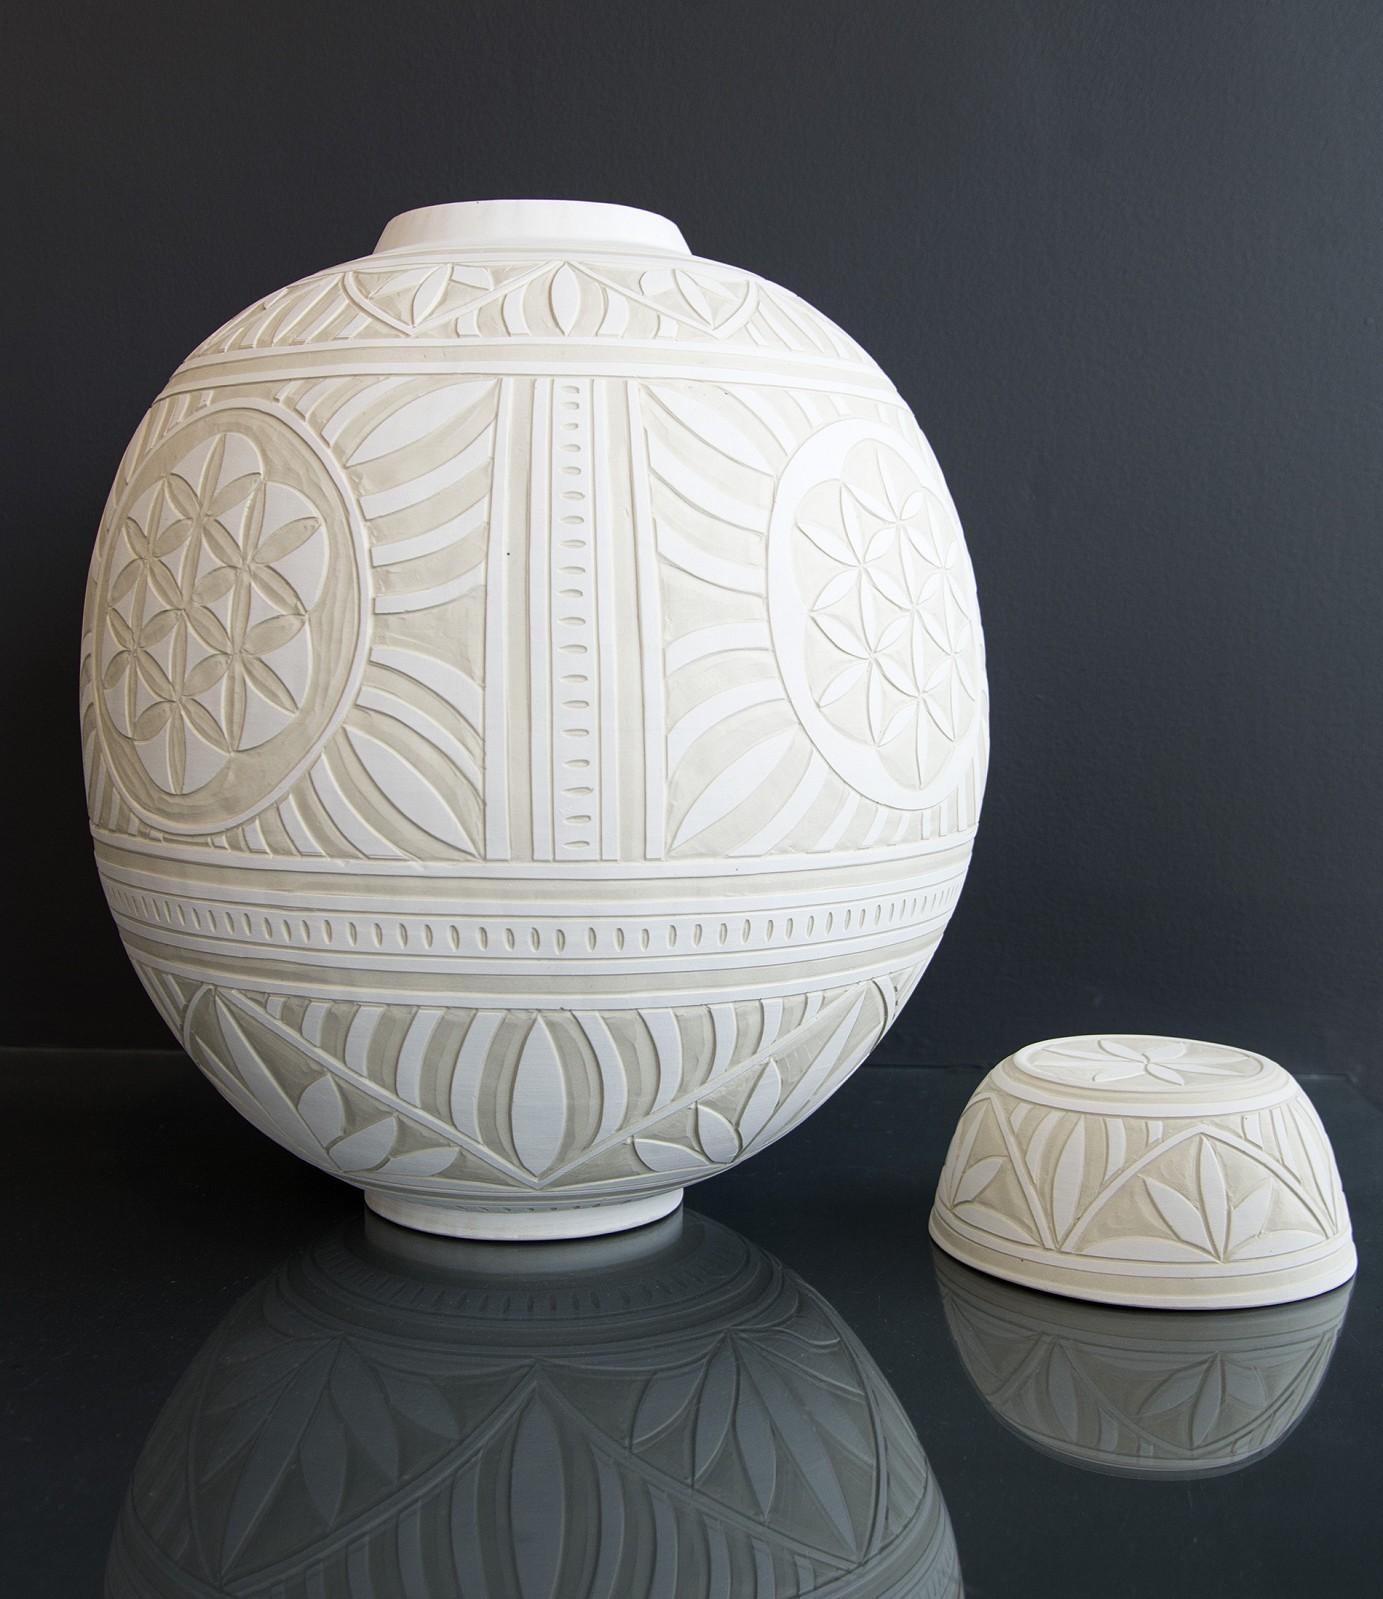 Large Engraved Ginger Jar - decorative, detailed, handcrafted, porcelain vessel - Contemporary Sculpture by Loren Kaplan